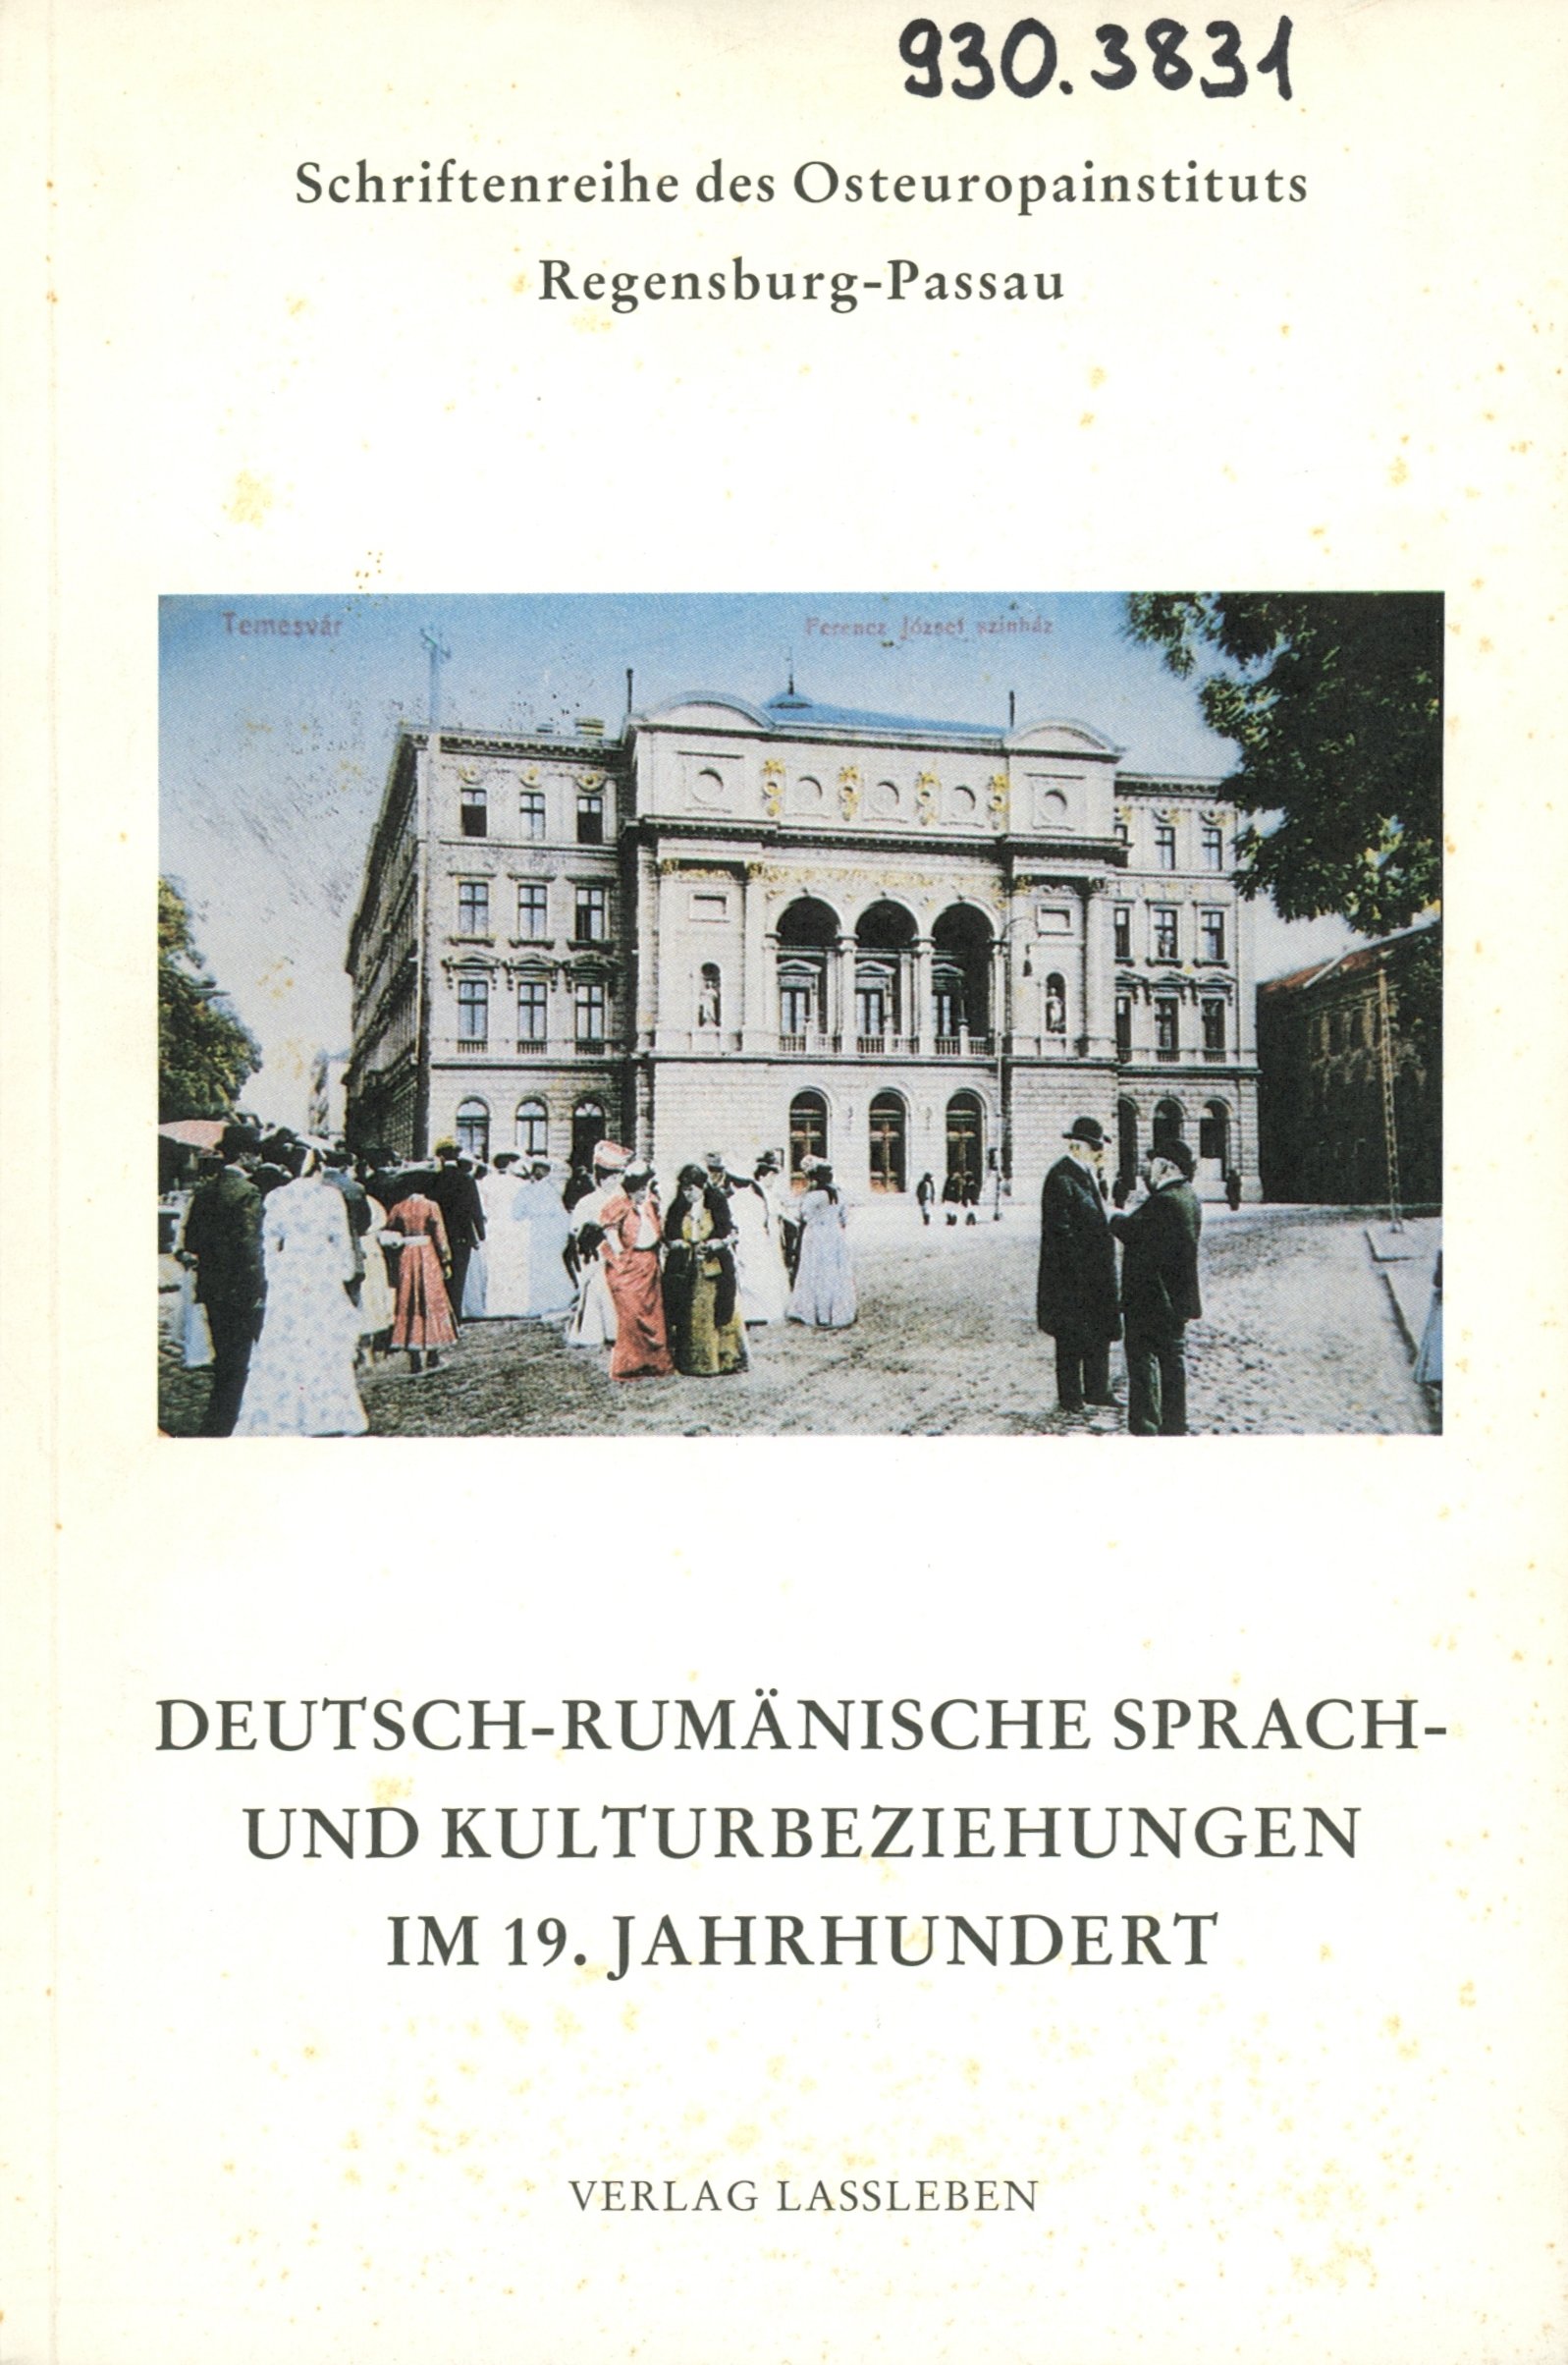 Deutsch-Rumánische Sprach-und Kulturbeziehungen im 19. Jahrhundert (Erkel Ferenc Múzeum és Könyvtár, Gyula CC BY-NC-SA)